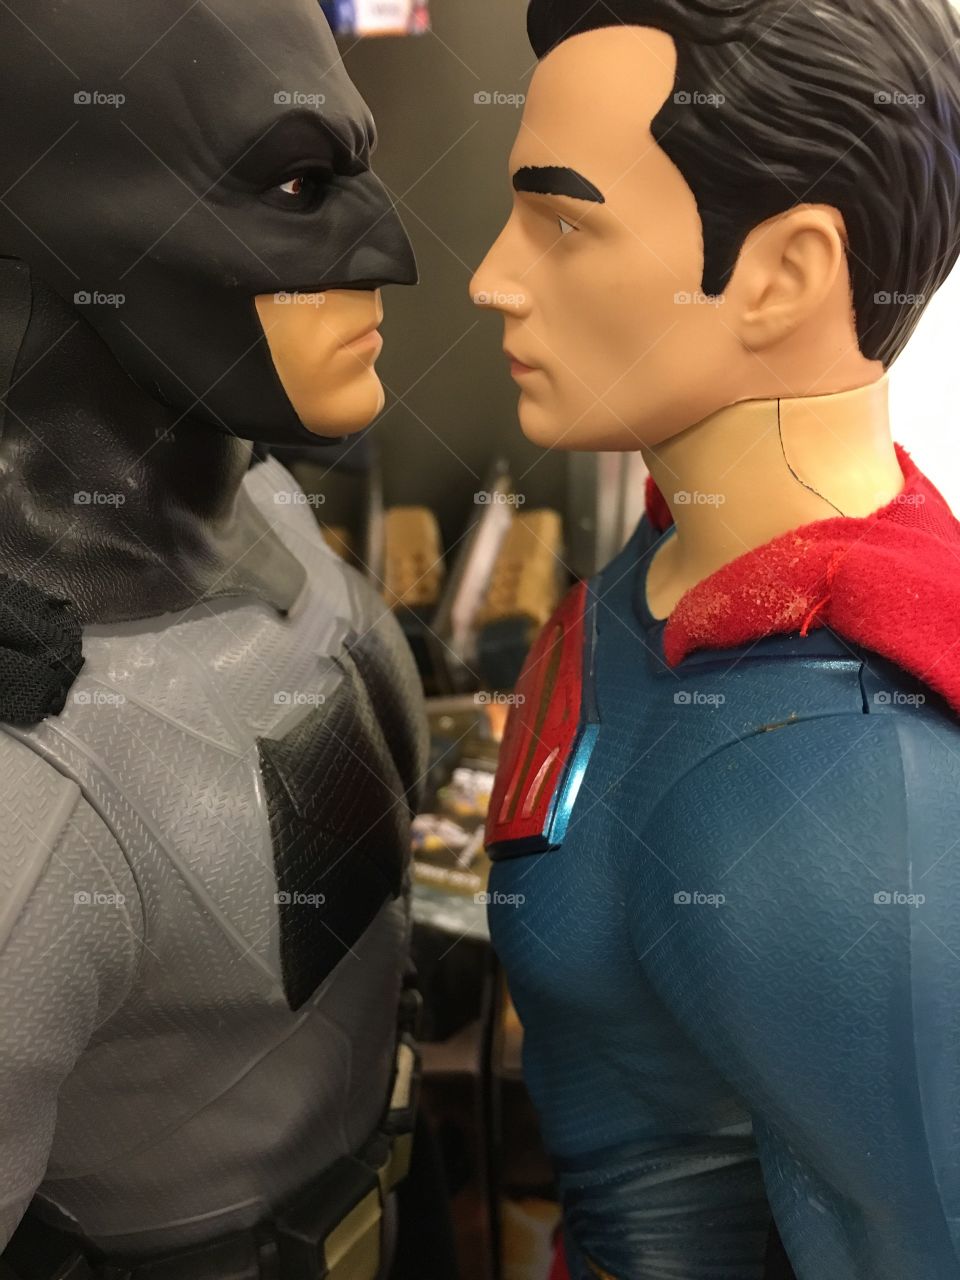 Batman versus Superman action figure toys 3 feet tall actual figures.